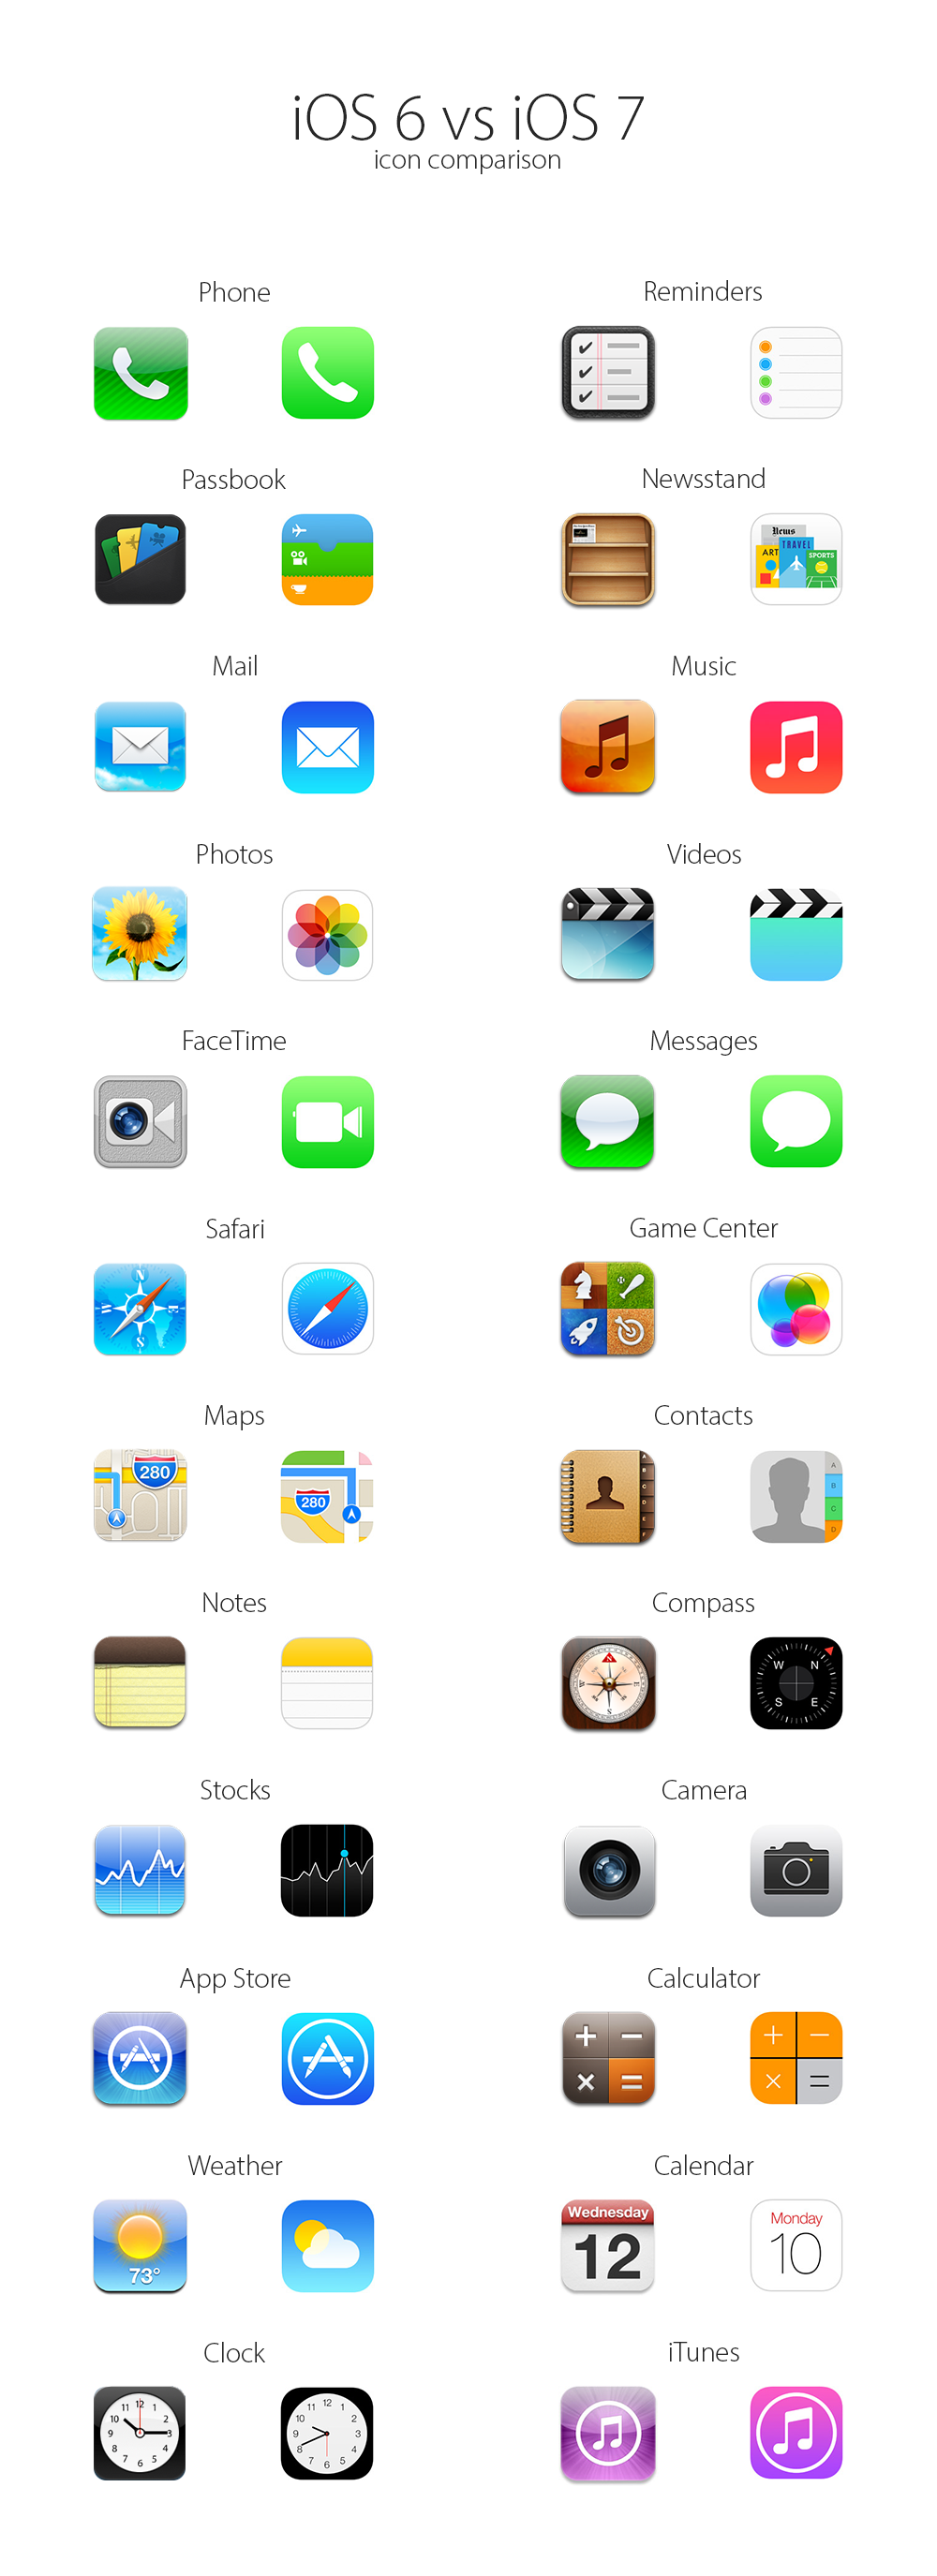 iOS 6 vs iOS 7 icons